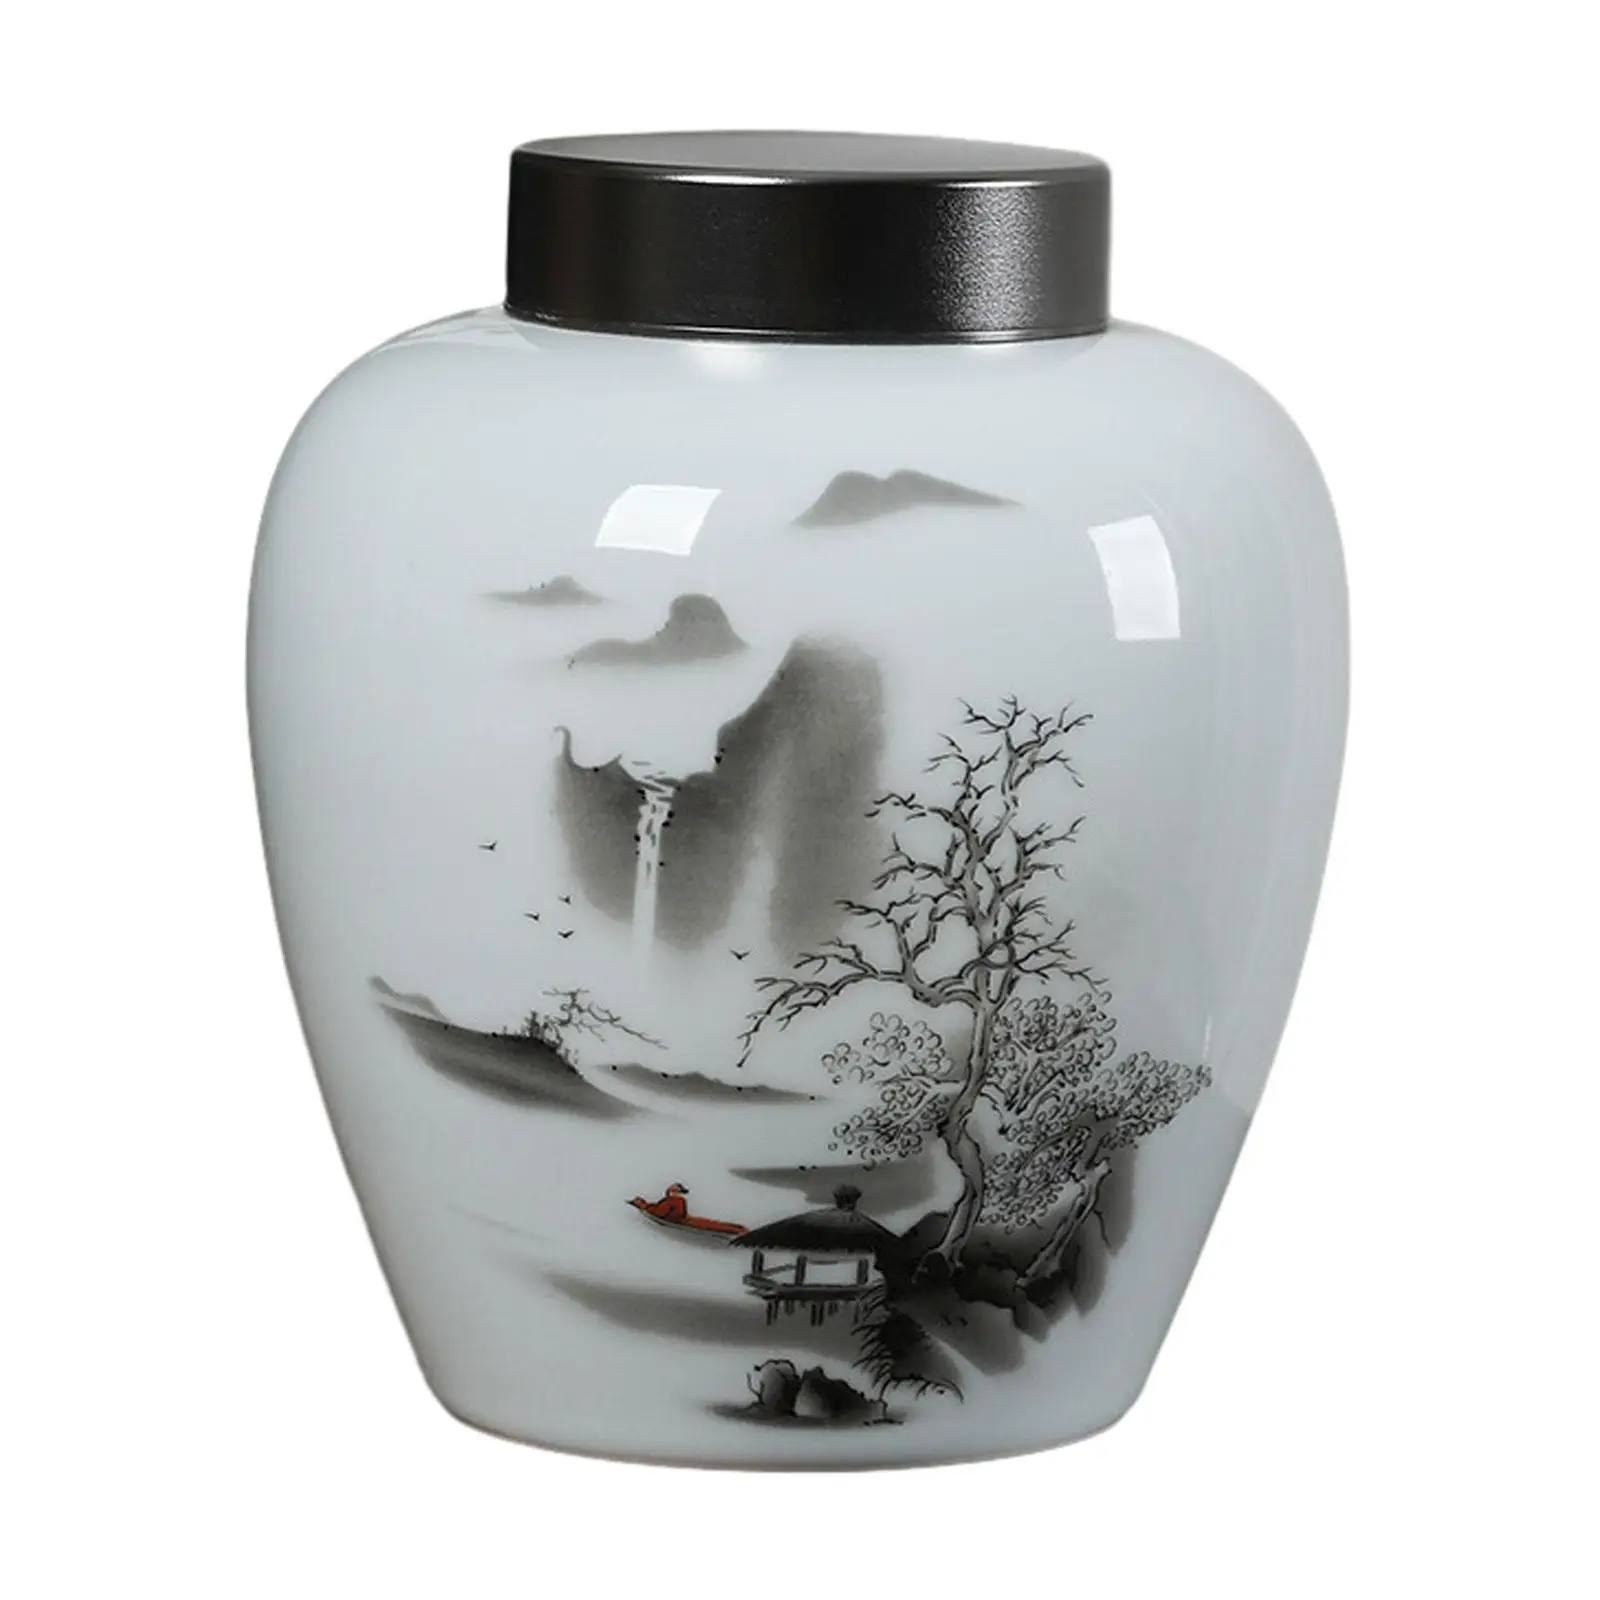 Porcelain Tea Canister Delicate Temple Jar Tea Vase Ceramic Ginger Jar for Home Party Living Room Table Centerpiece Decoration